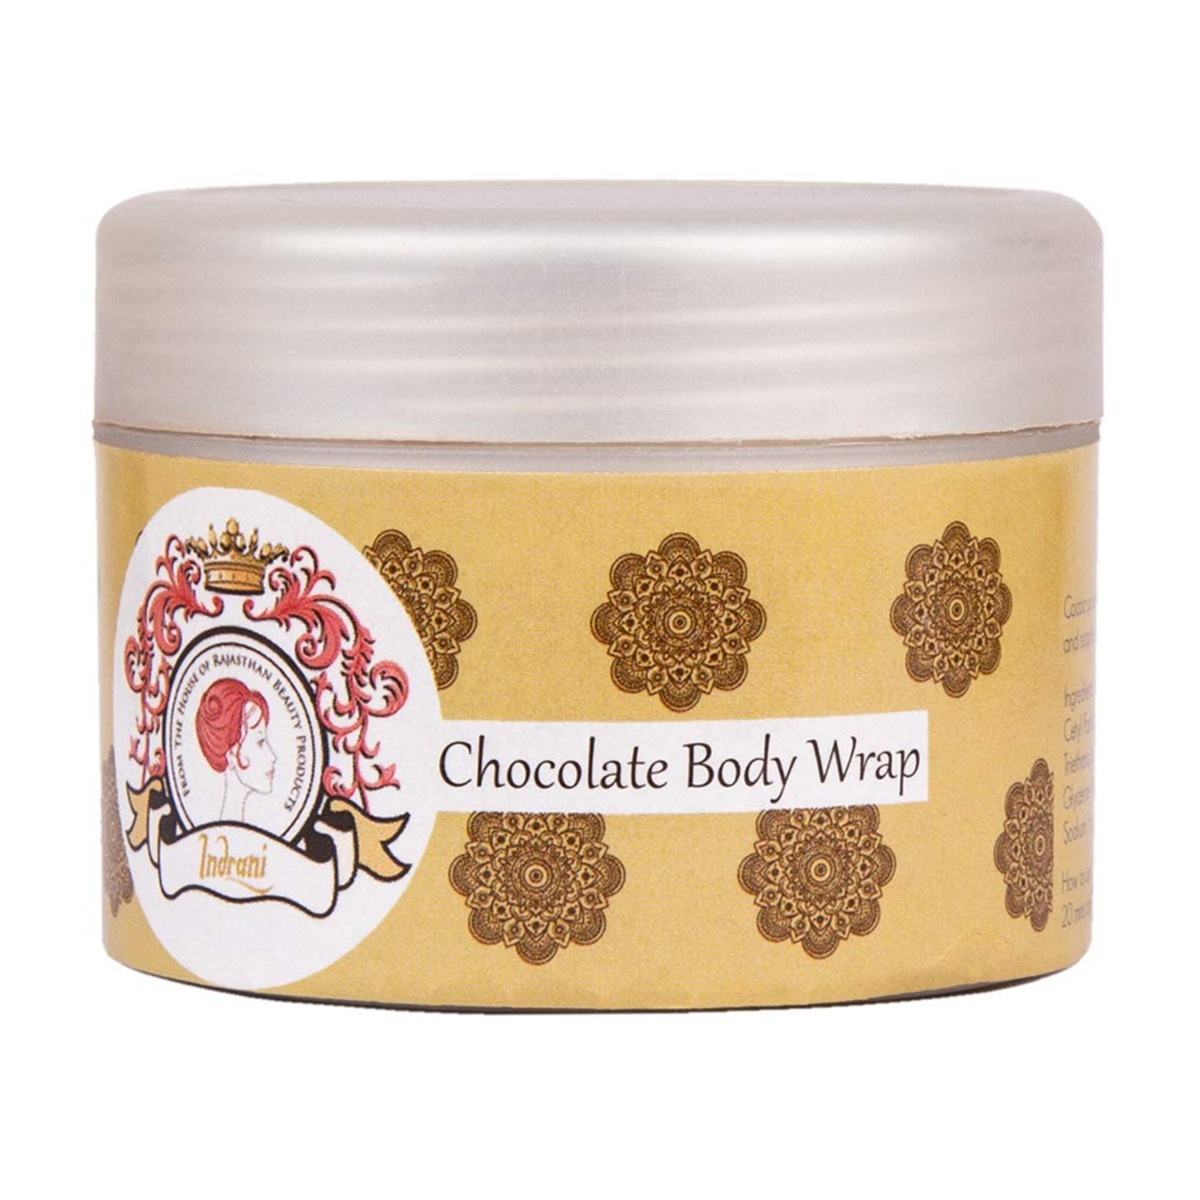 Indrani Chocolate Body Wrap, 50gm